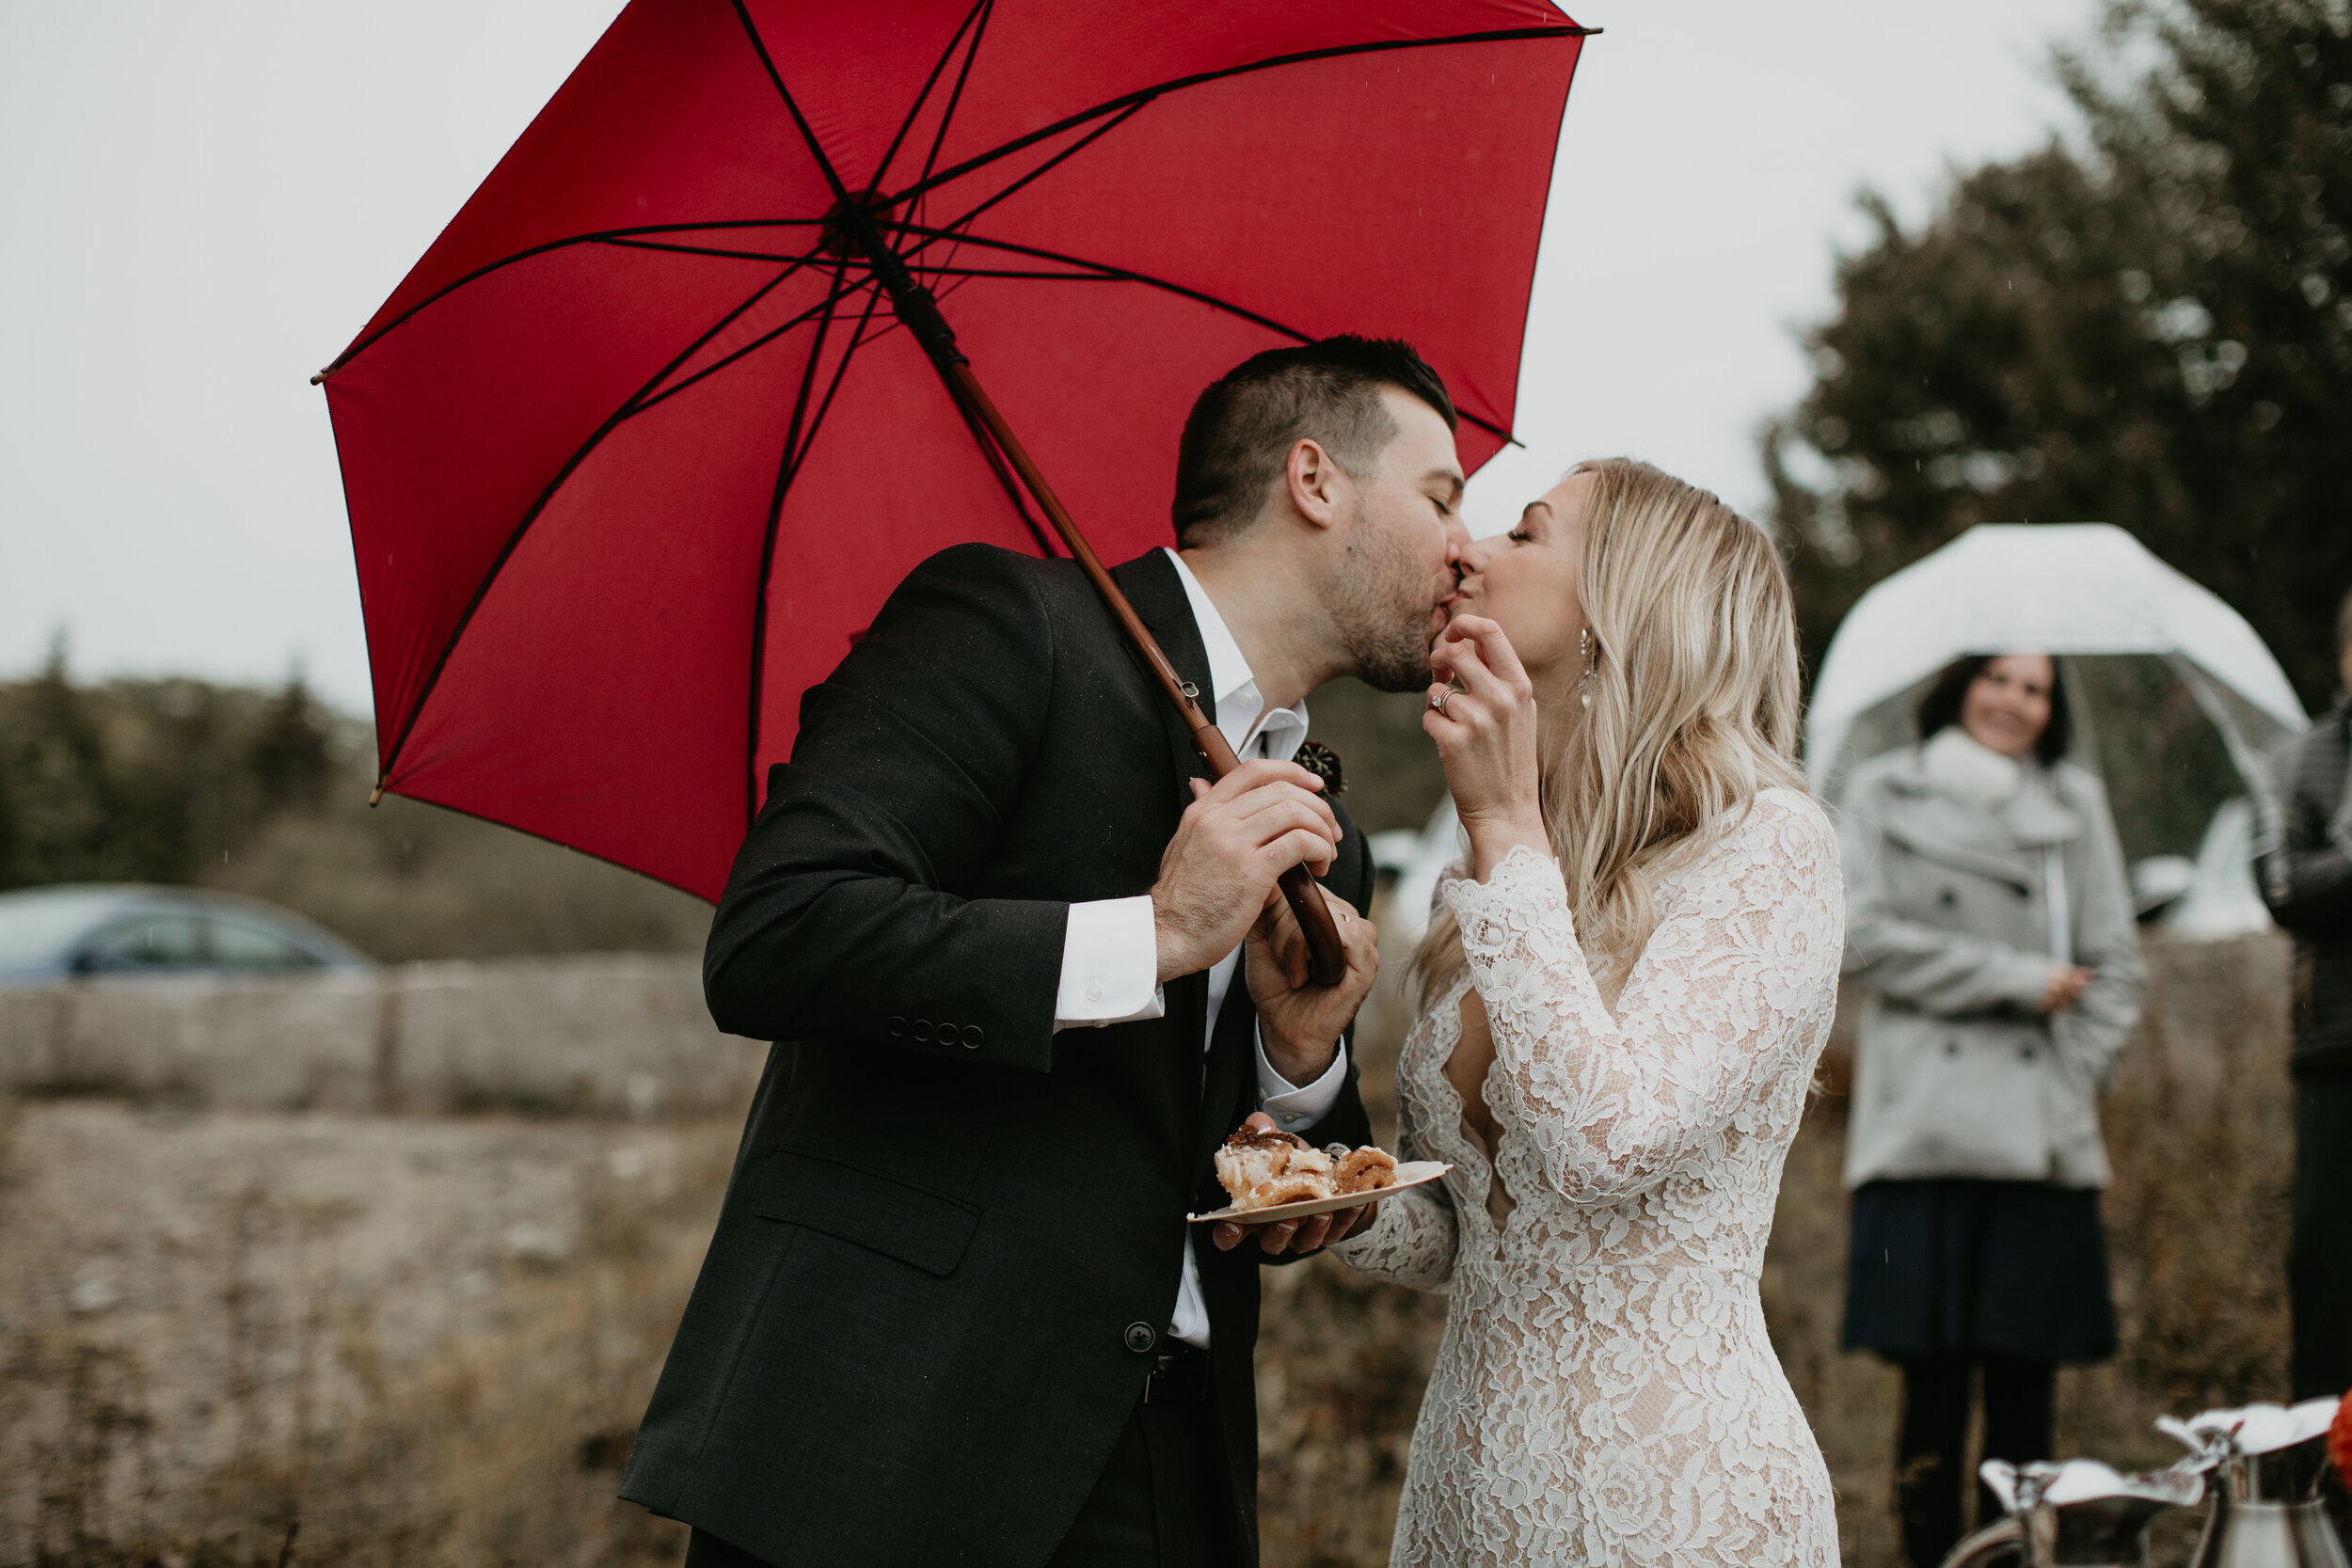 Nicole-Daacke-Photography-Acadia-national-park-elopement-photography-elopement-in-acadia-inspiration-maine-intimate-wedding-destination-elopement-photographer-rainy-day-maine-coast-bar-harbor-elopement-photography-142.jpg